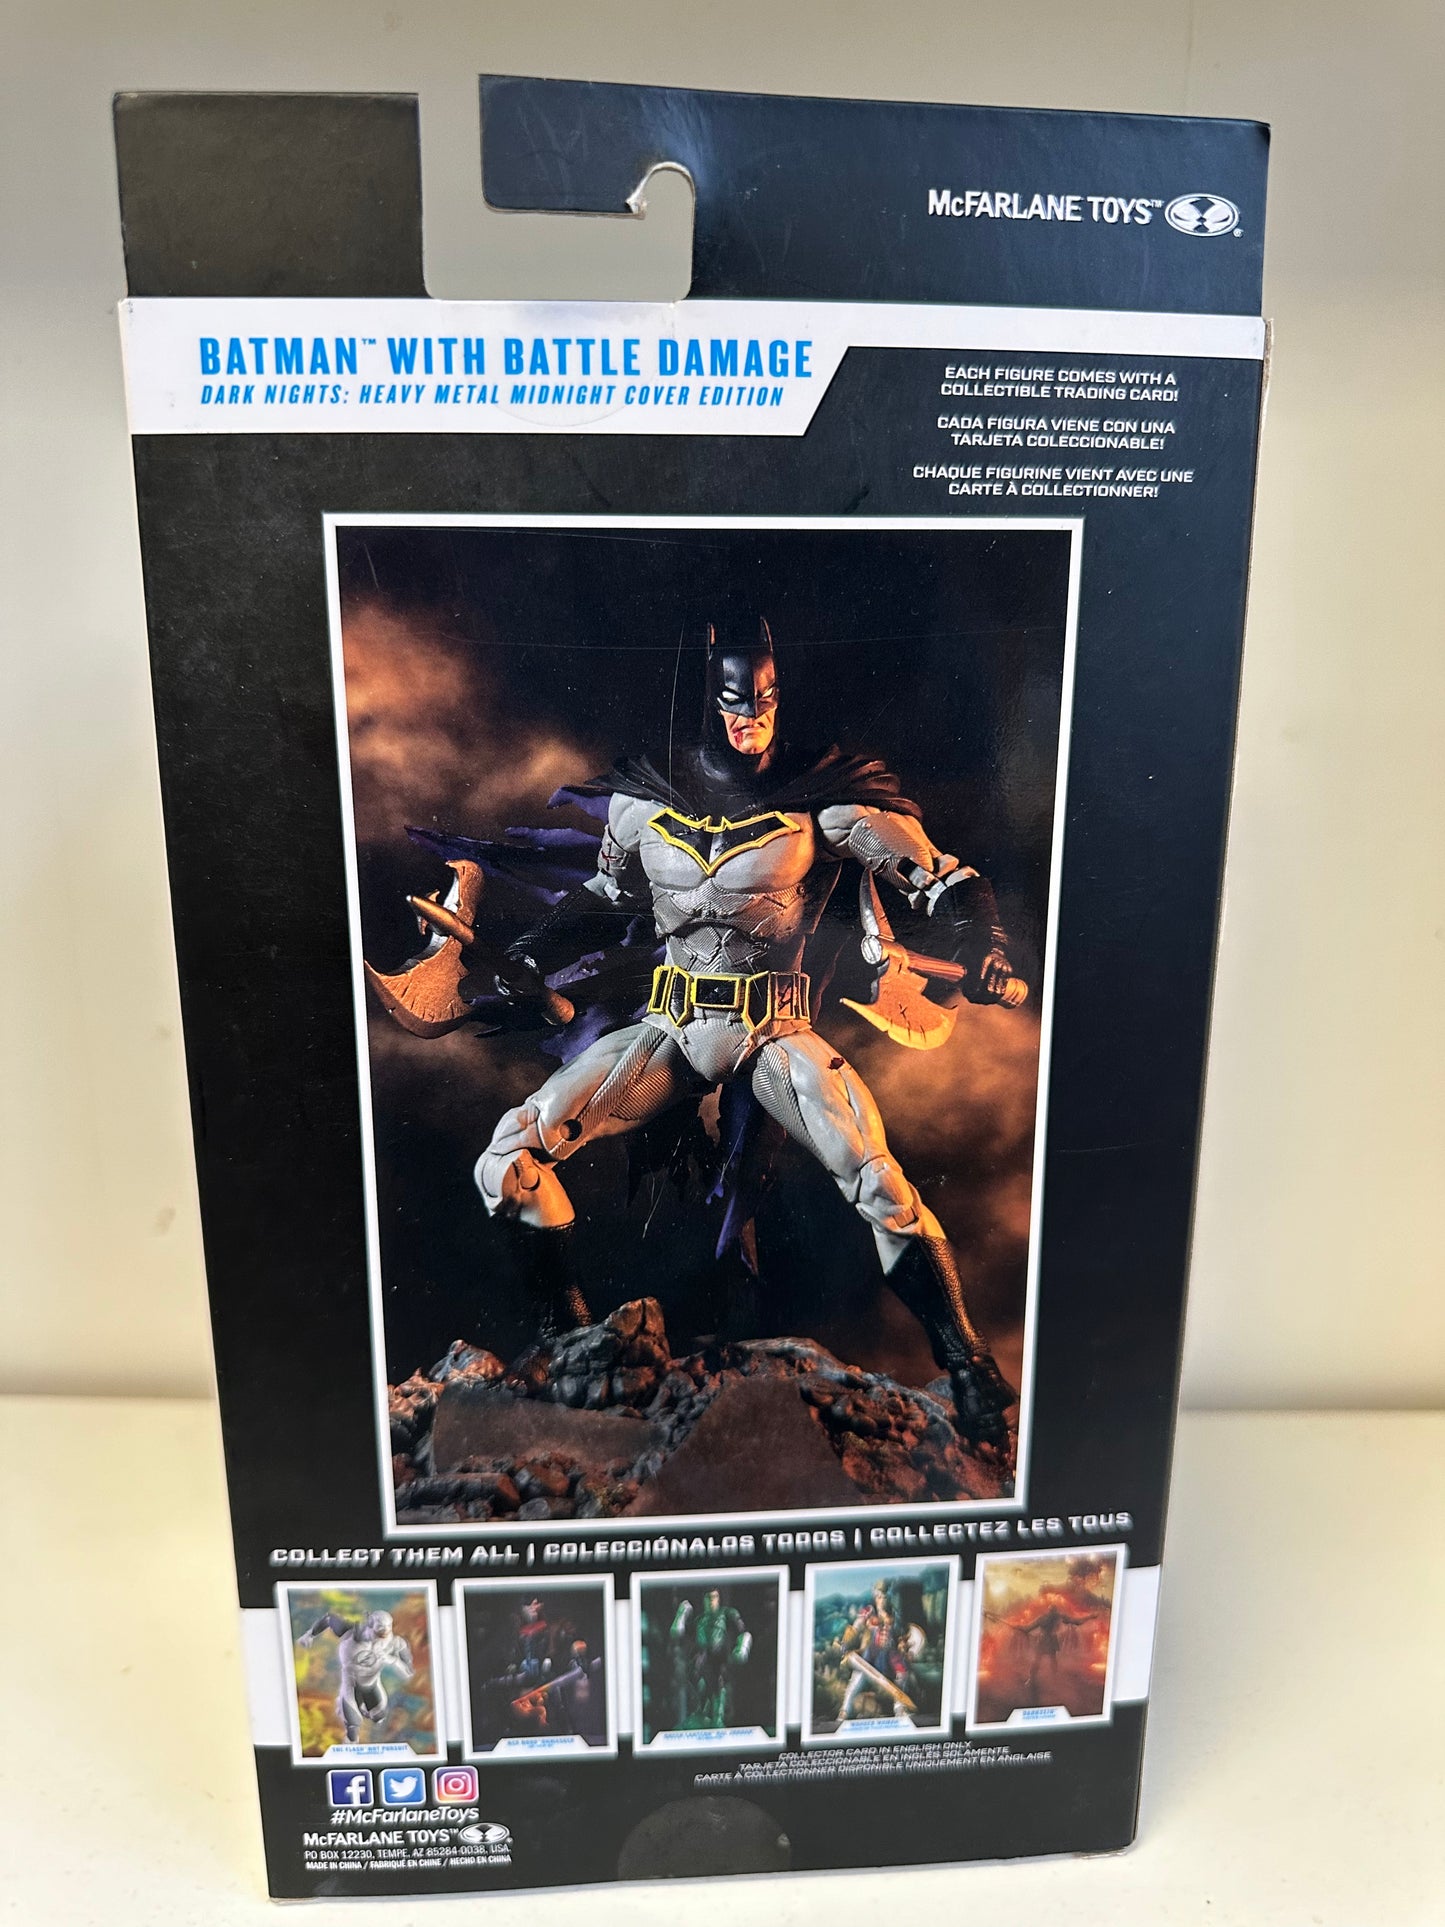 DC Comics Multiverse Batman with Battle Damage MISB Brand new Figure